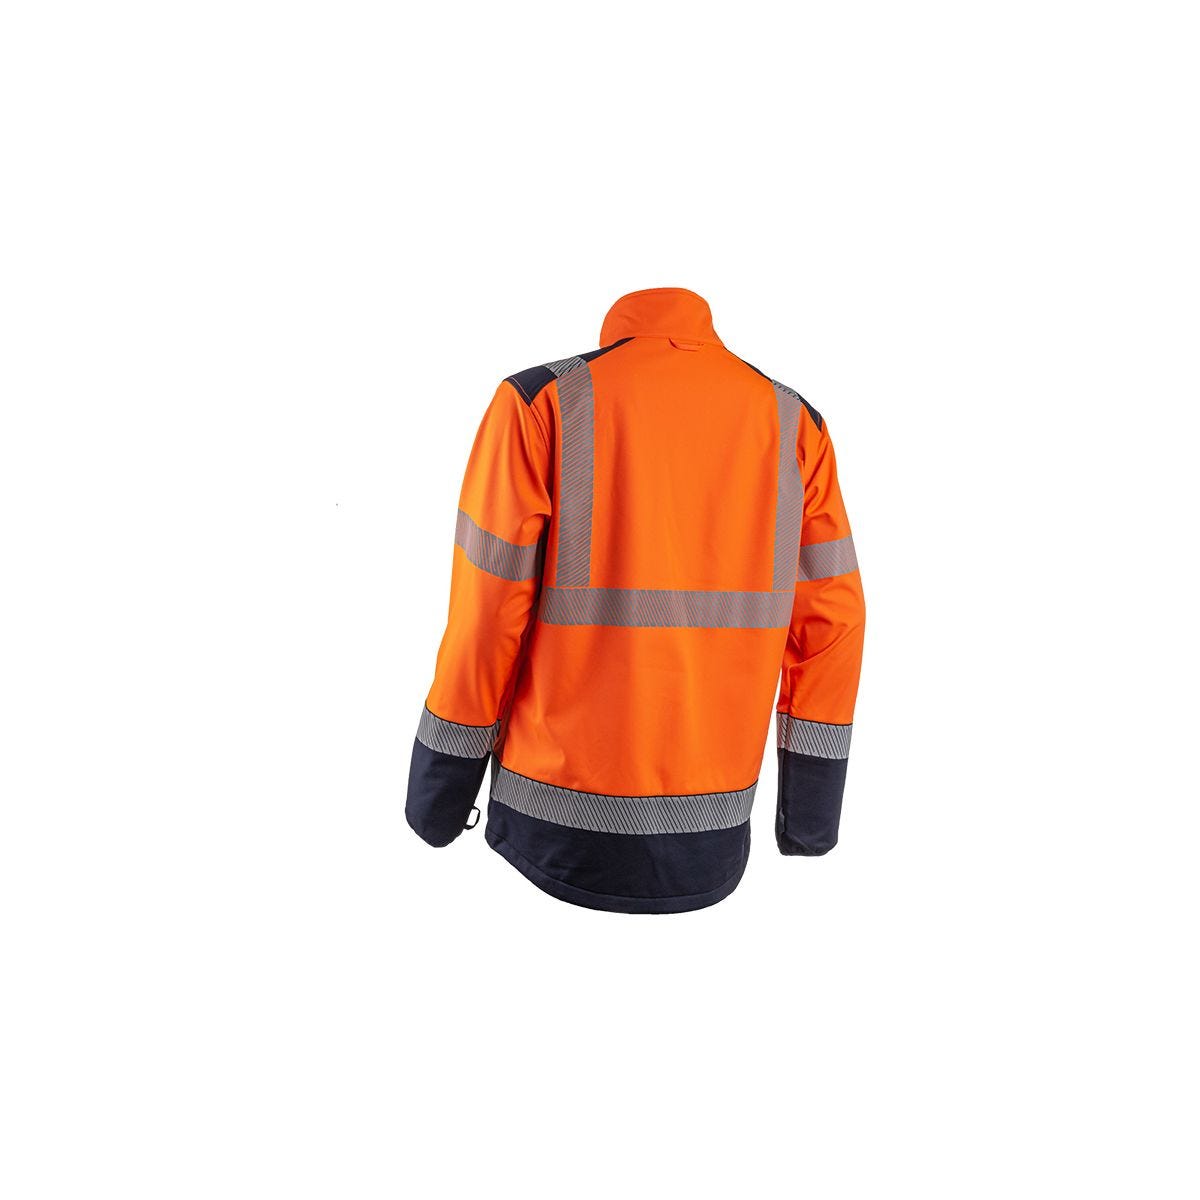 Veste softshell HV Kazan orange et marine - Coverguard - Taille XL 1